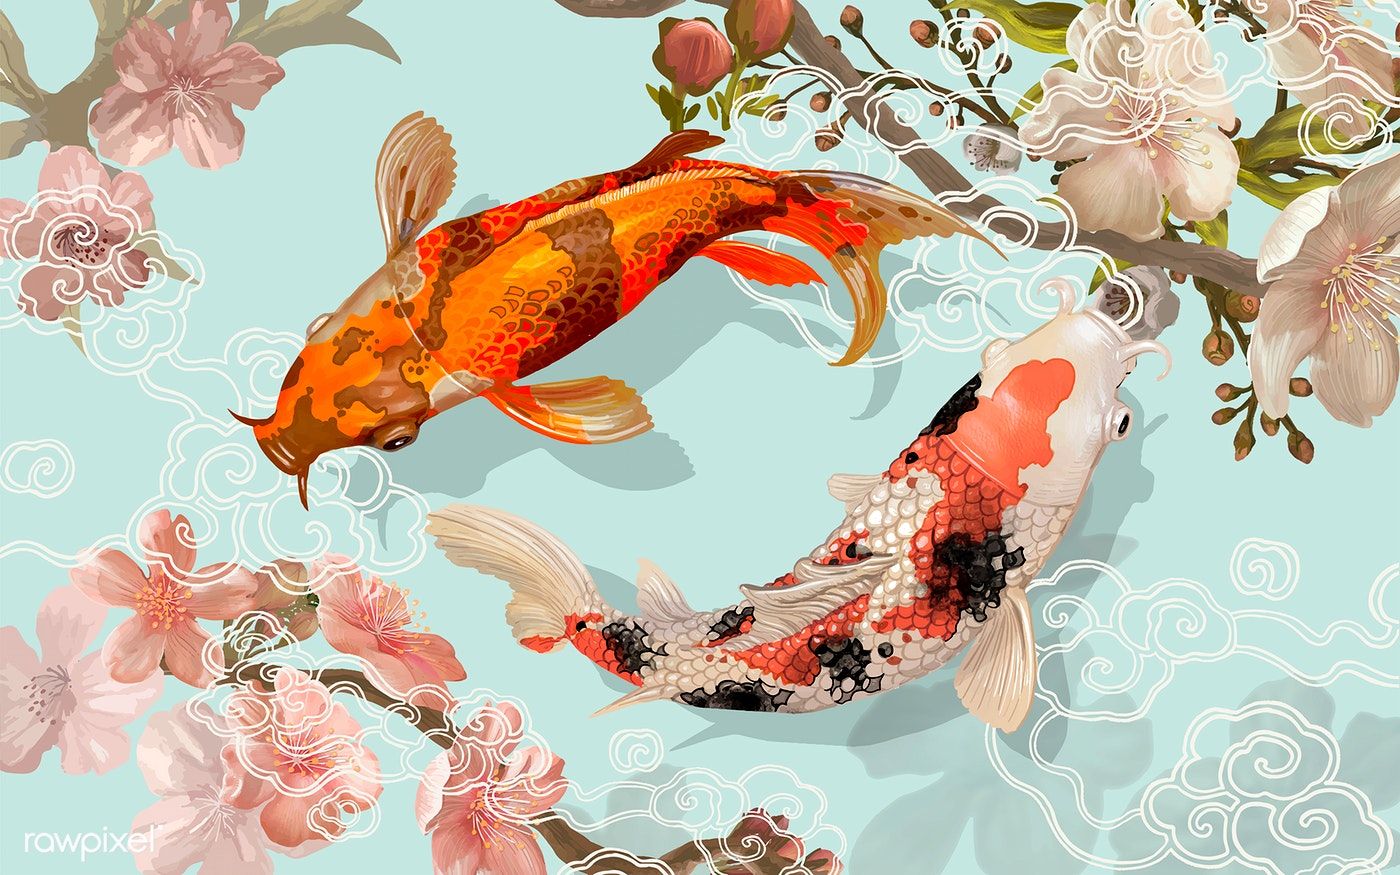 Japanese Koi Fish Painting - 1400x875 Wallpaper - teahub.io